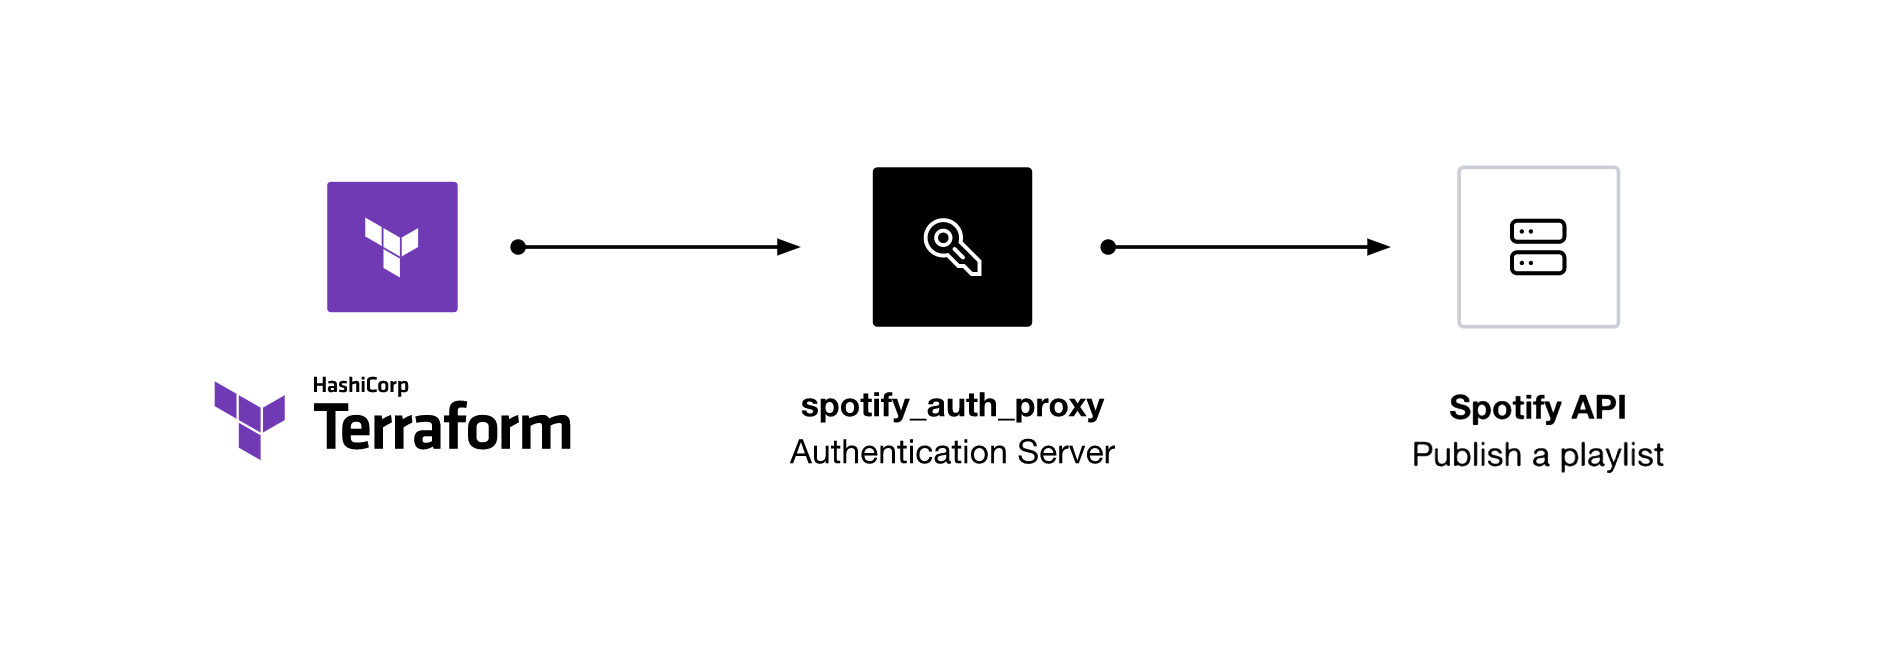 Diagram of the authorization flow through the Spotify authorization
proxy